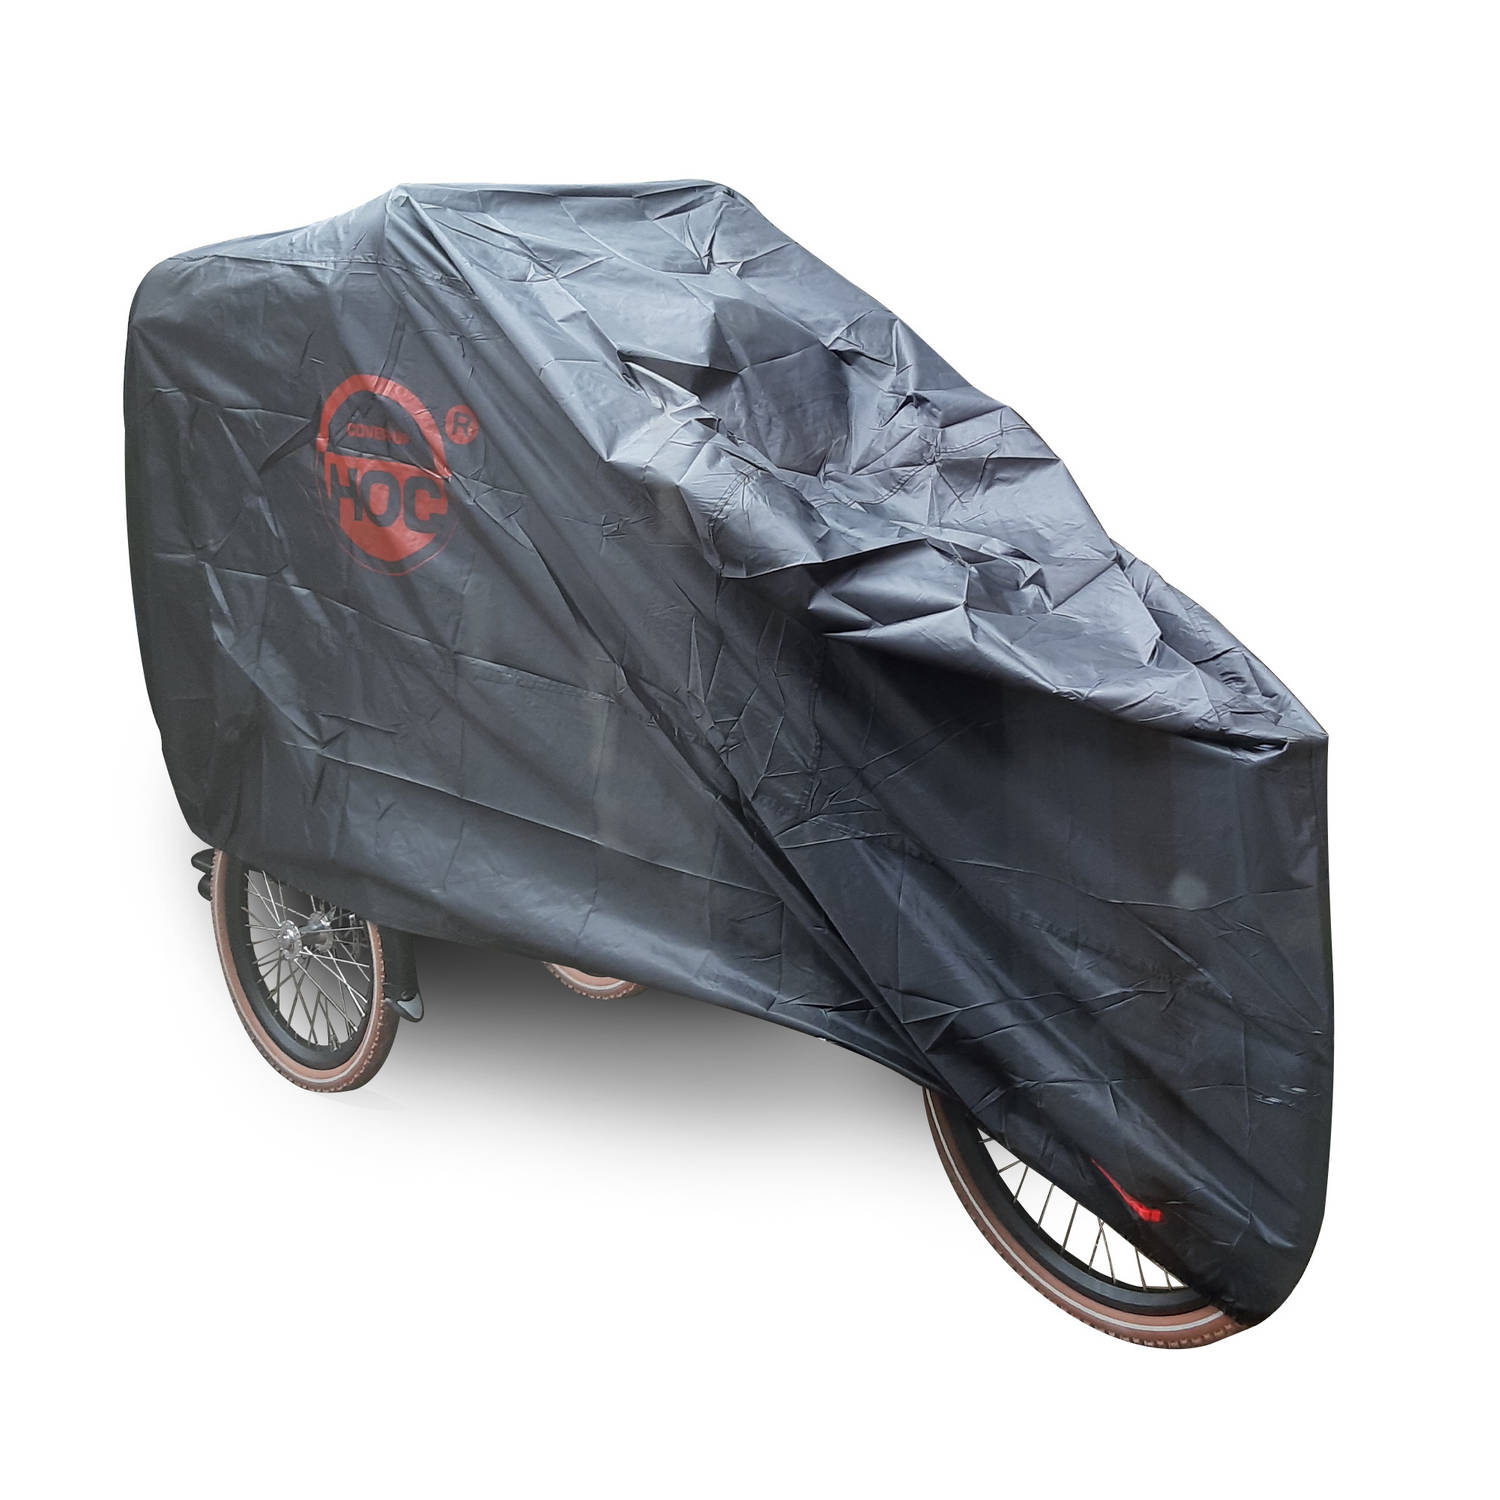 CUHOC Vogue E-Bike Carry 2 Wheel Bakfietshoes zwart stofvrij-ademend-waterafstotend Red Label